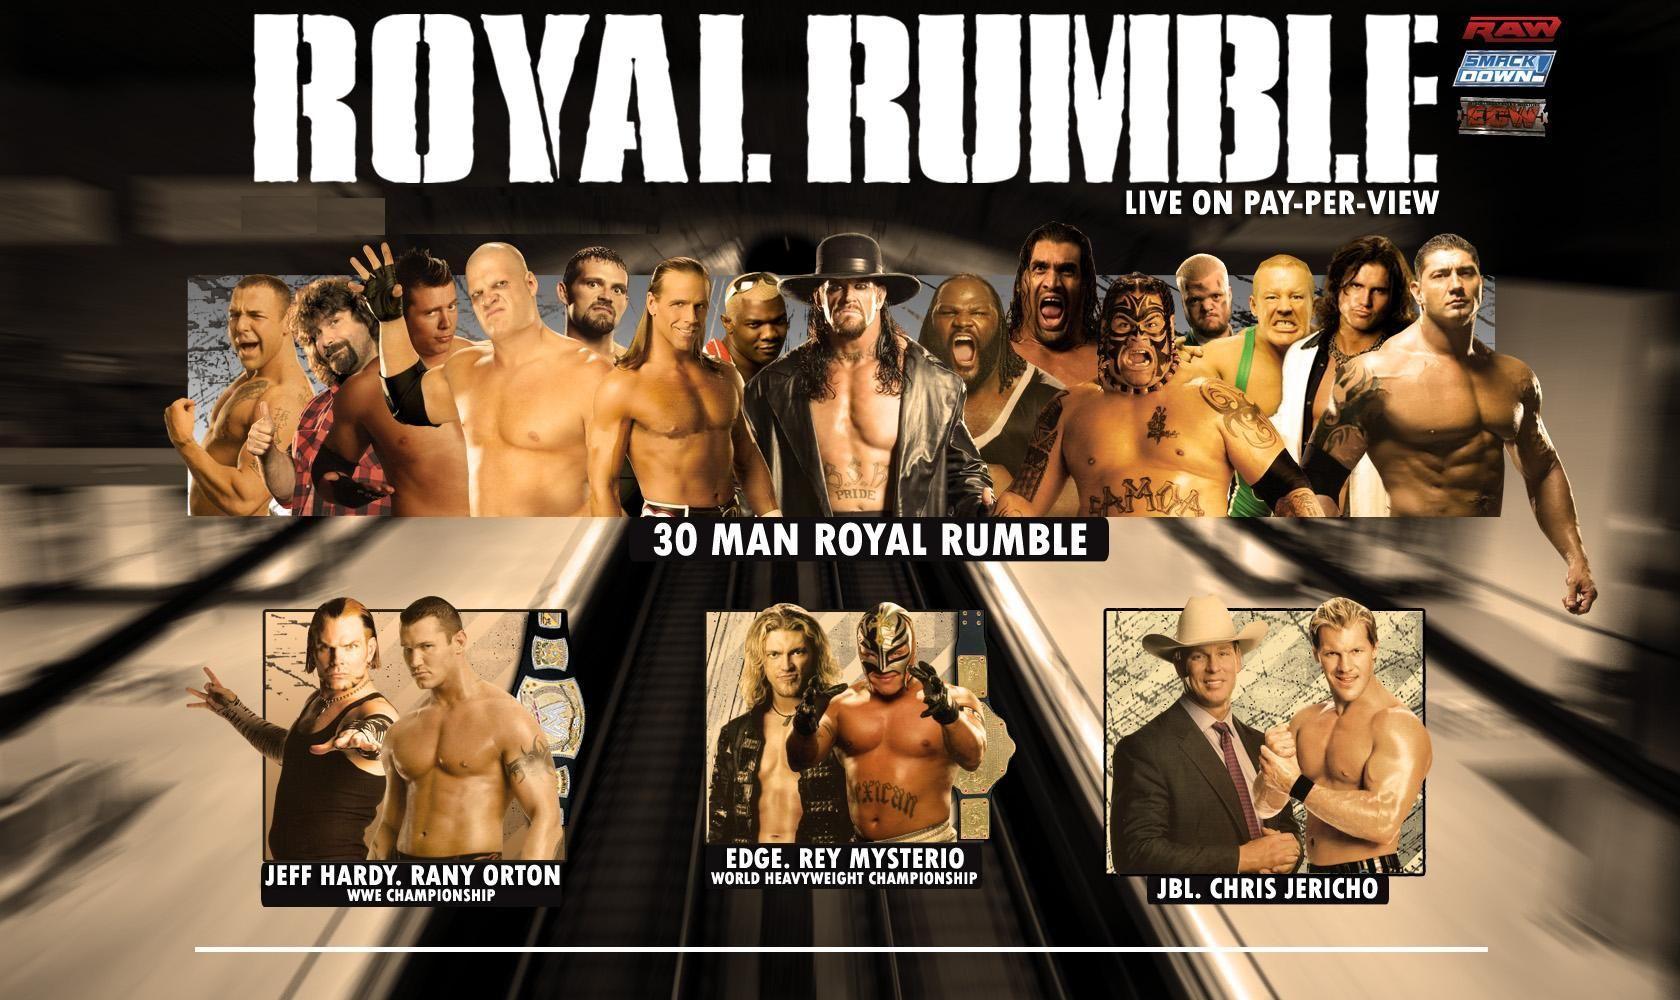 Wallpaper of Royal Rumble Superstars, WWE Wallpaper, WWE PPV's